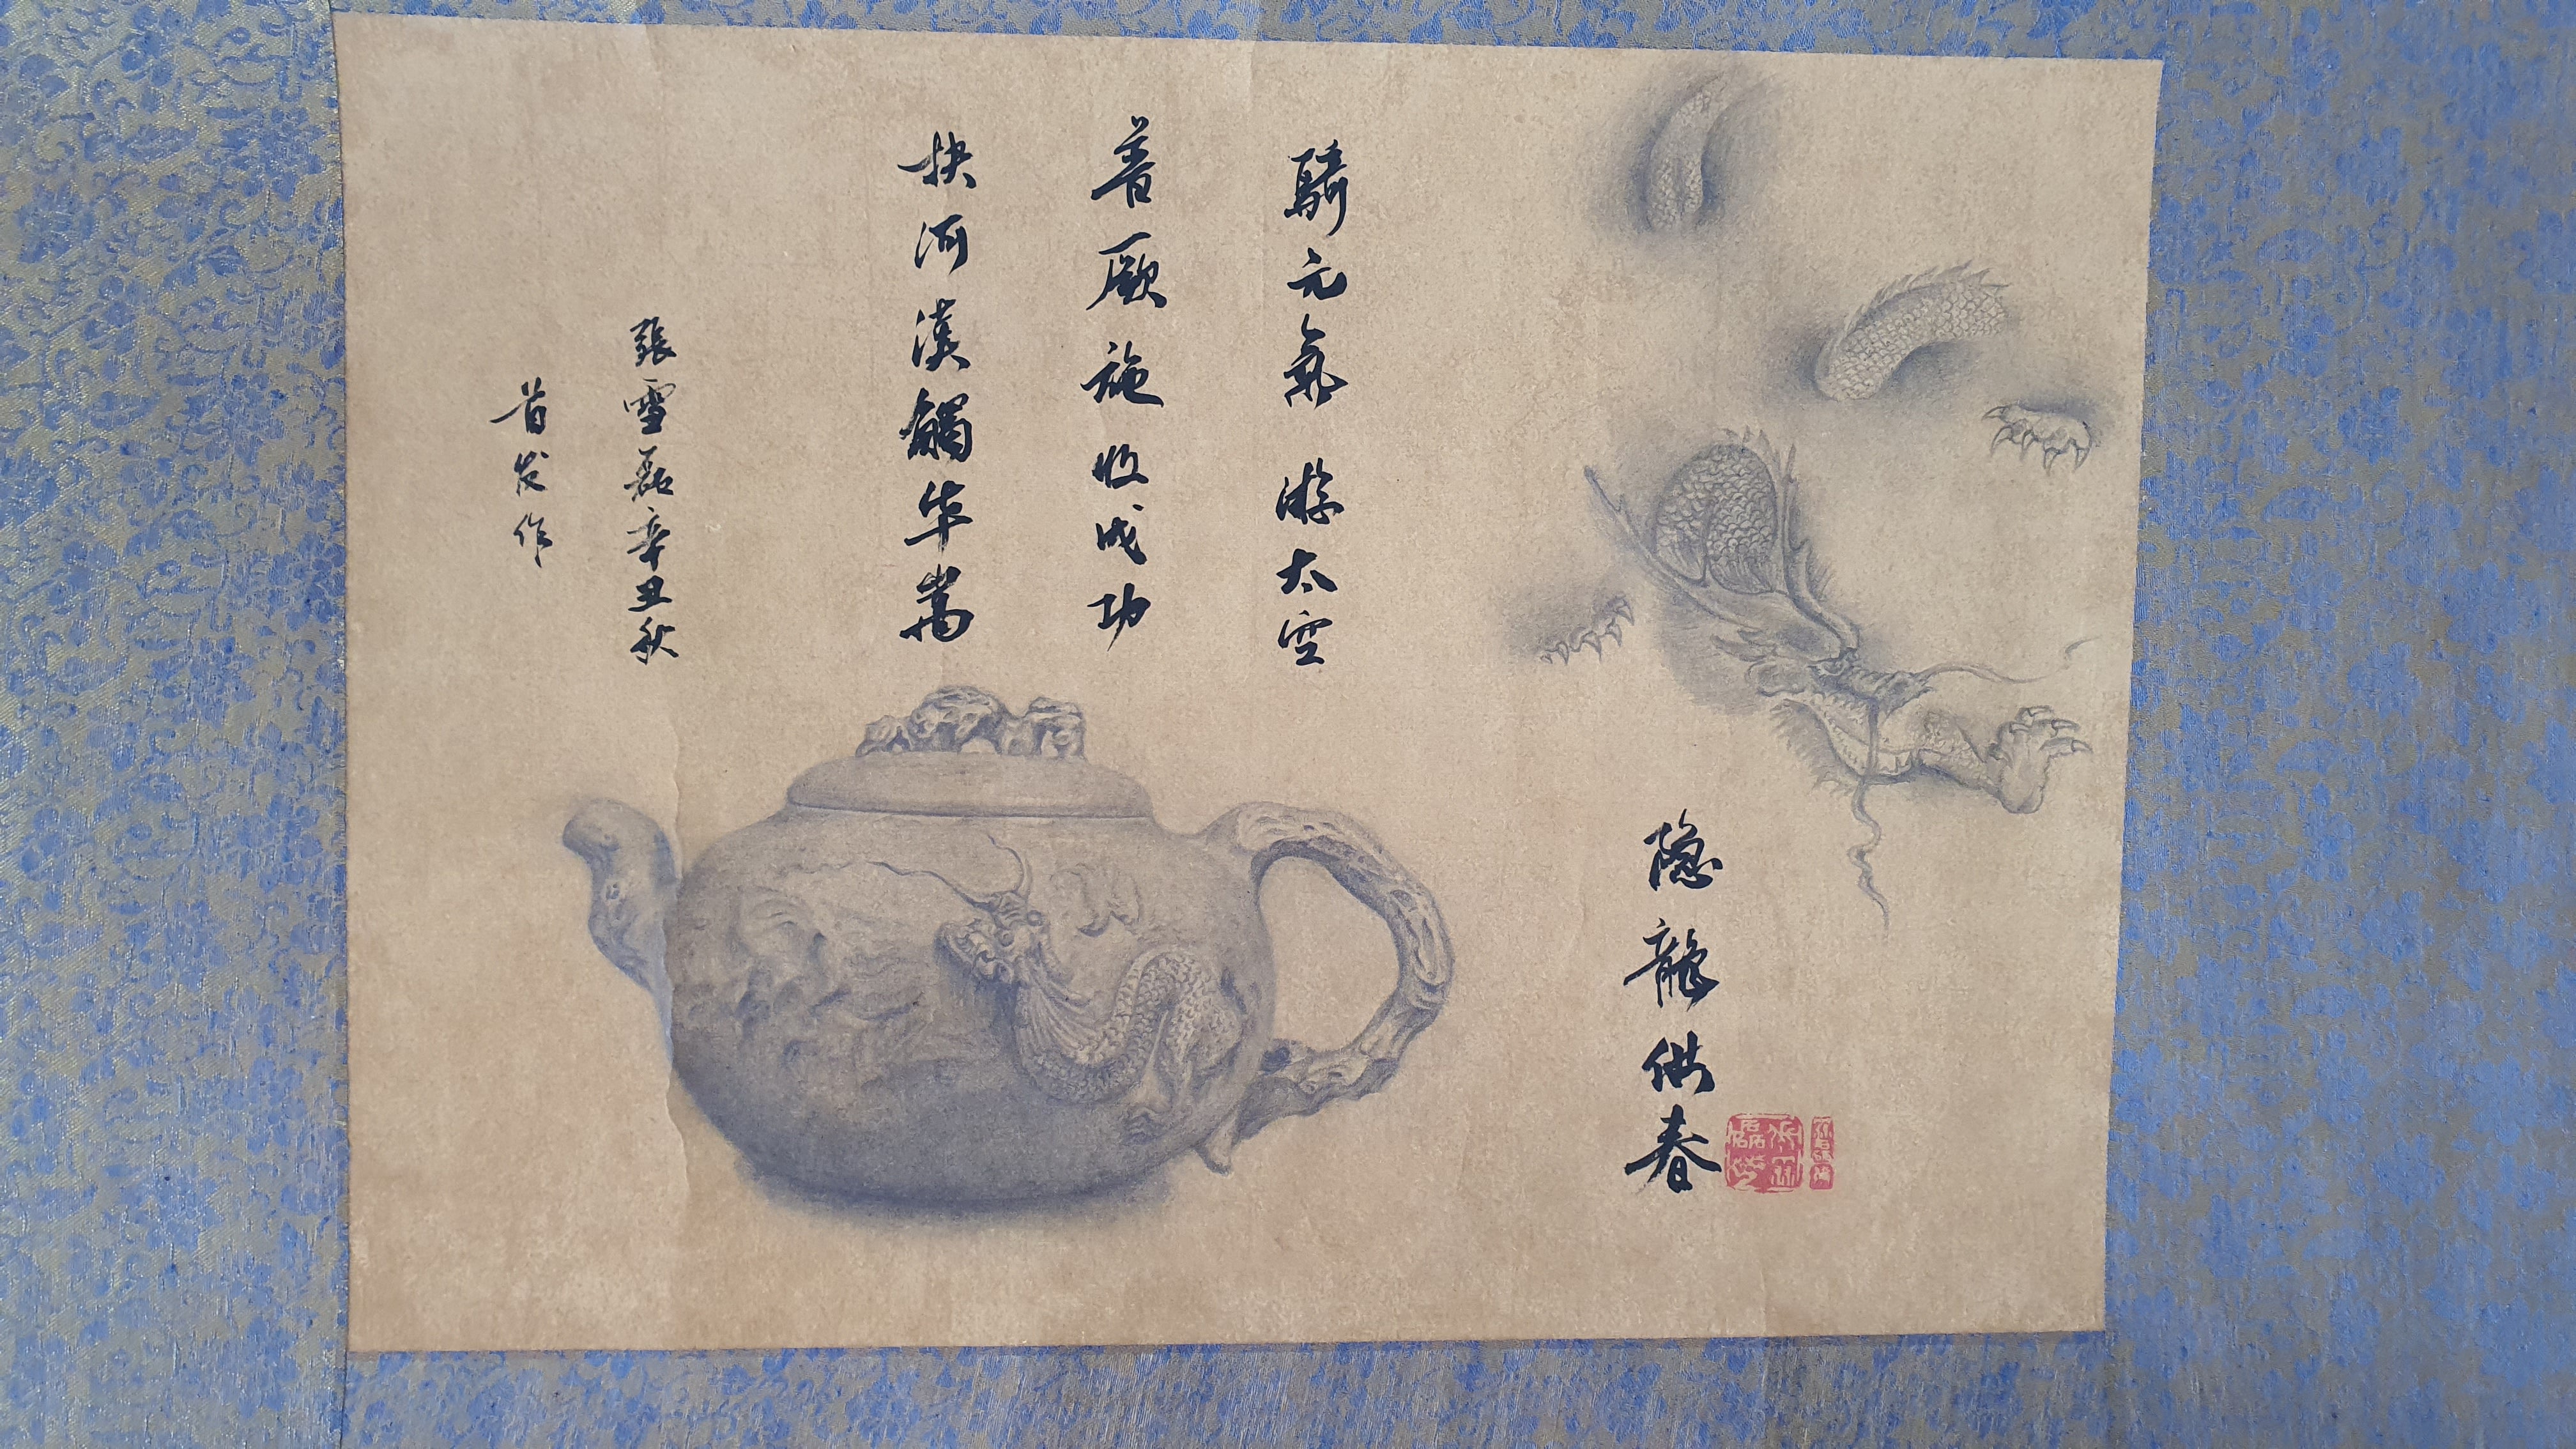 World's First 隐龙供春 "Shrouded Dragon GongChun" by HuaQi Ornate Pot Prodigy L4 Zhang Xue Lei 张雪磊, 助理工艺美术师。